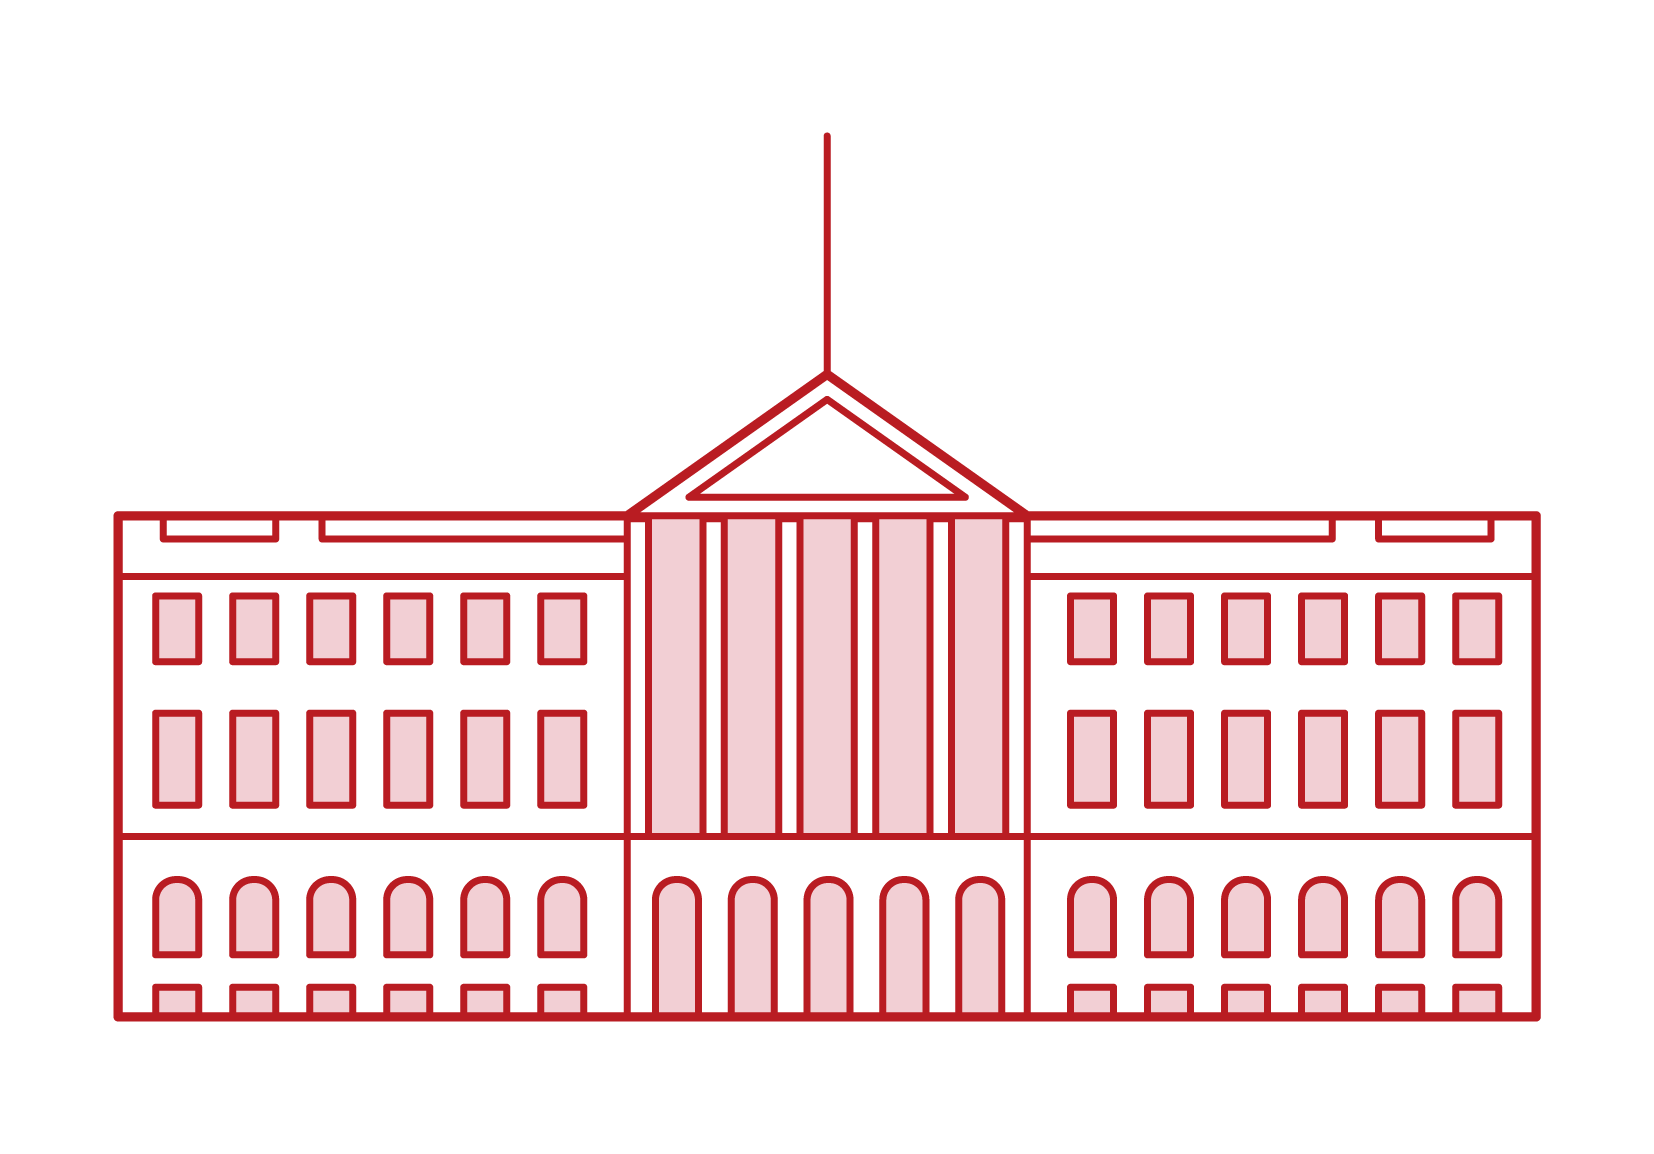 Illustration of the Norwegian Royal Palace